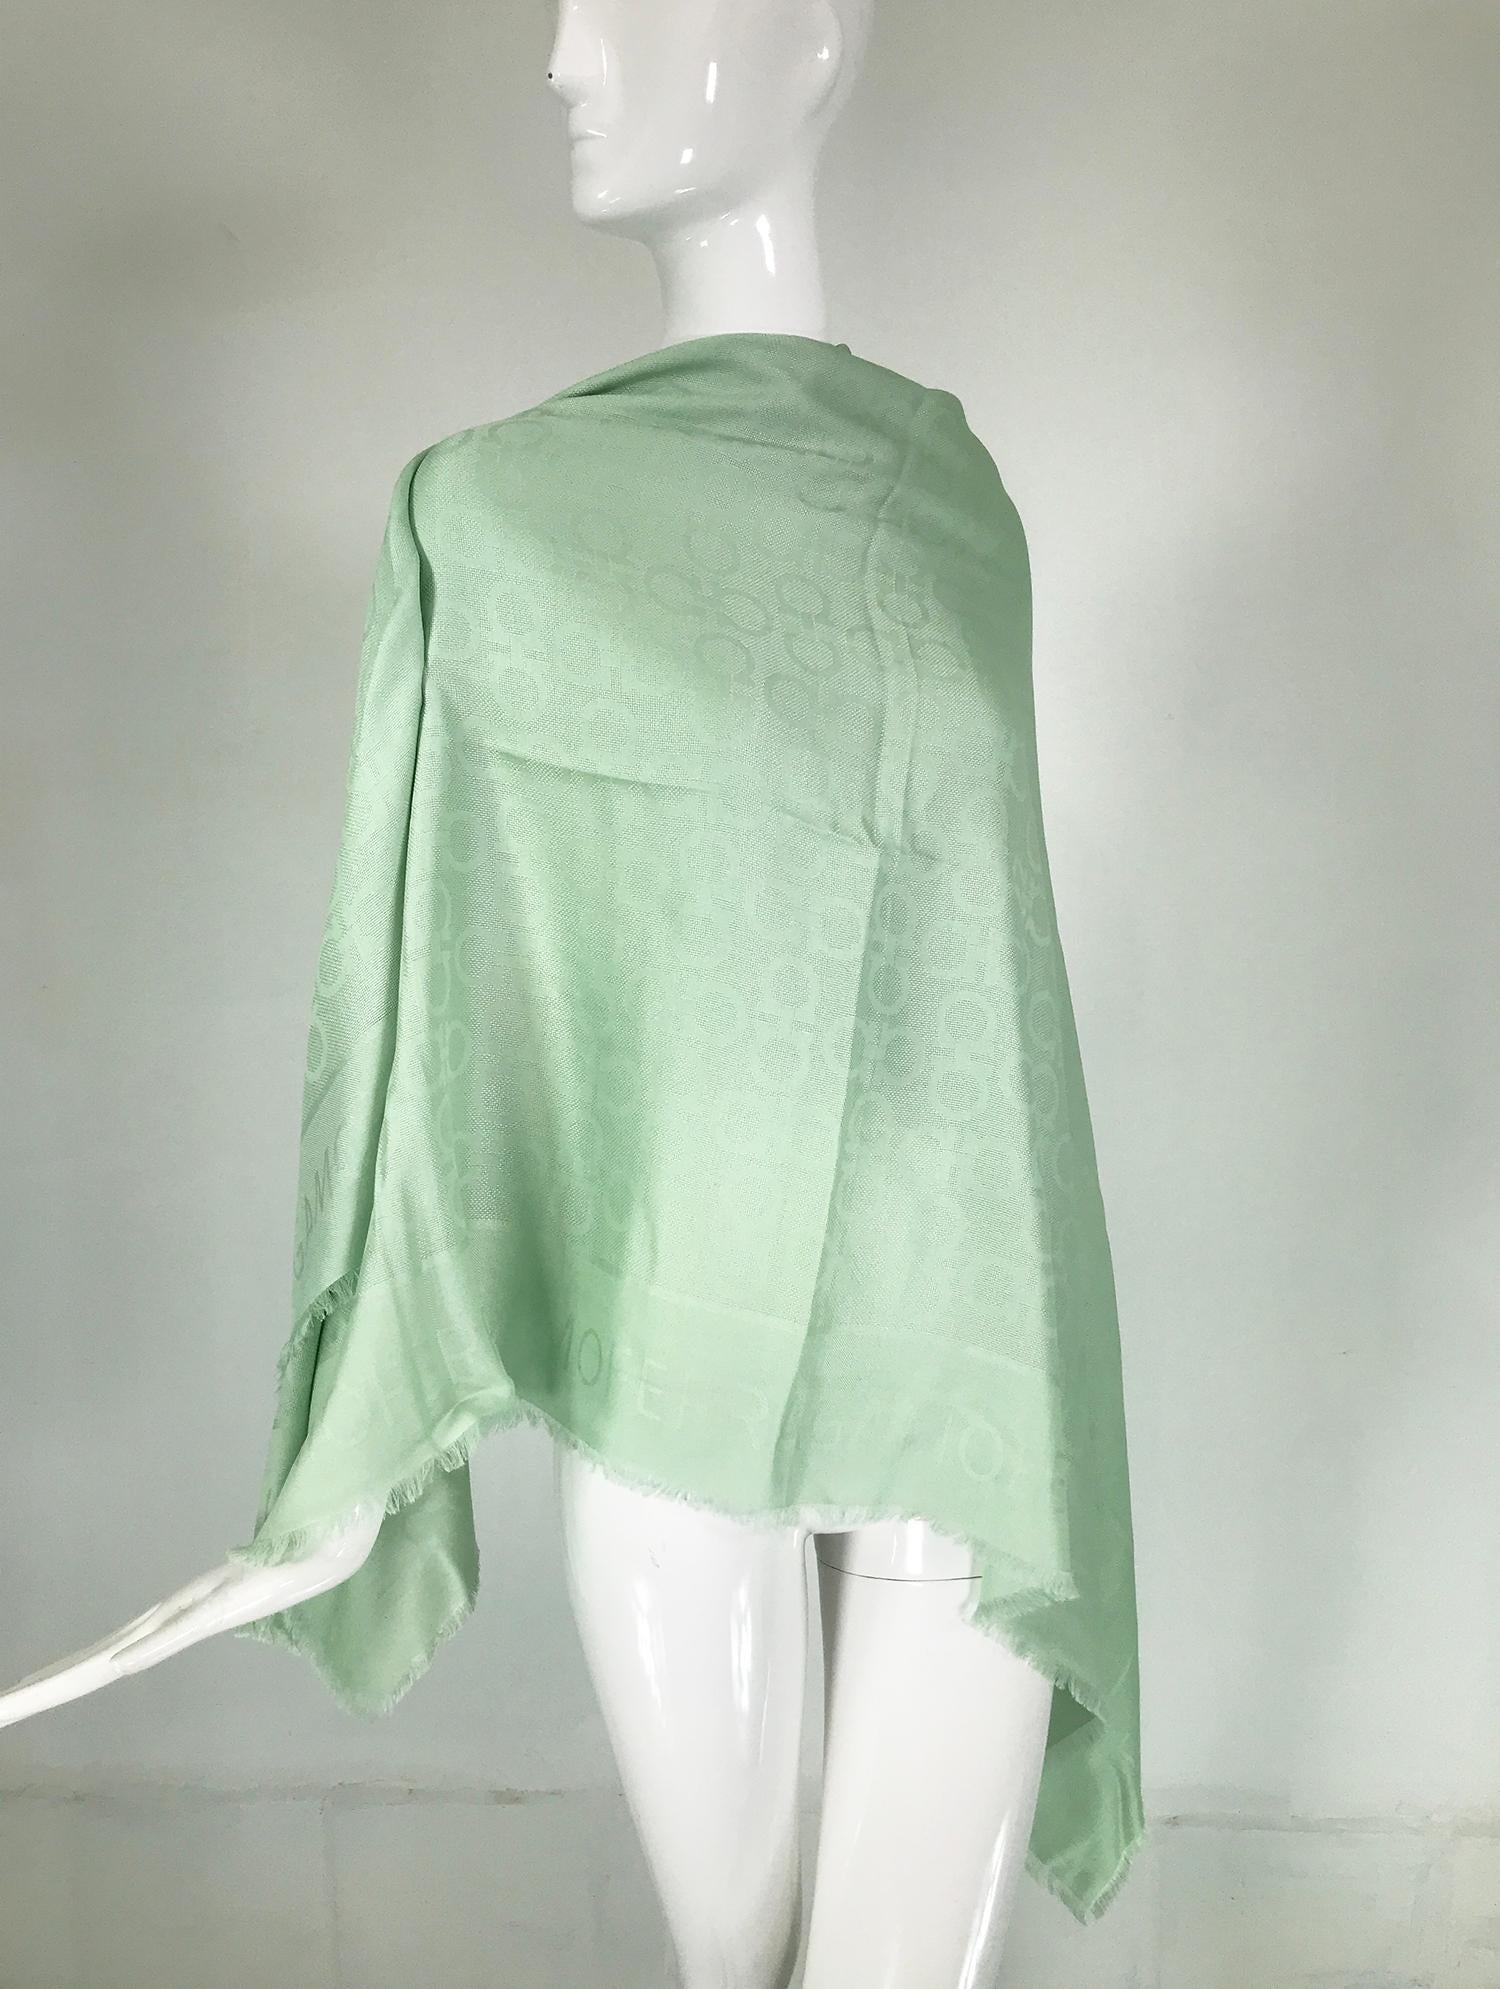 Salvatore Ferragamo mint green silk & wool jacquard shawl with self fringe. A beautiful shawl with a jacquard woven Ferragamo logo design.